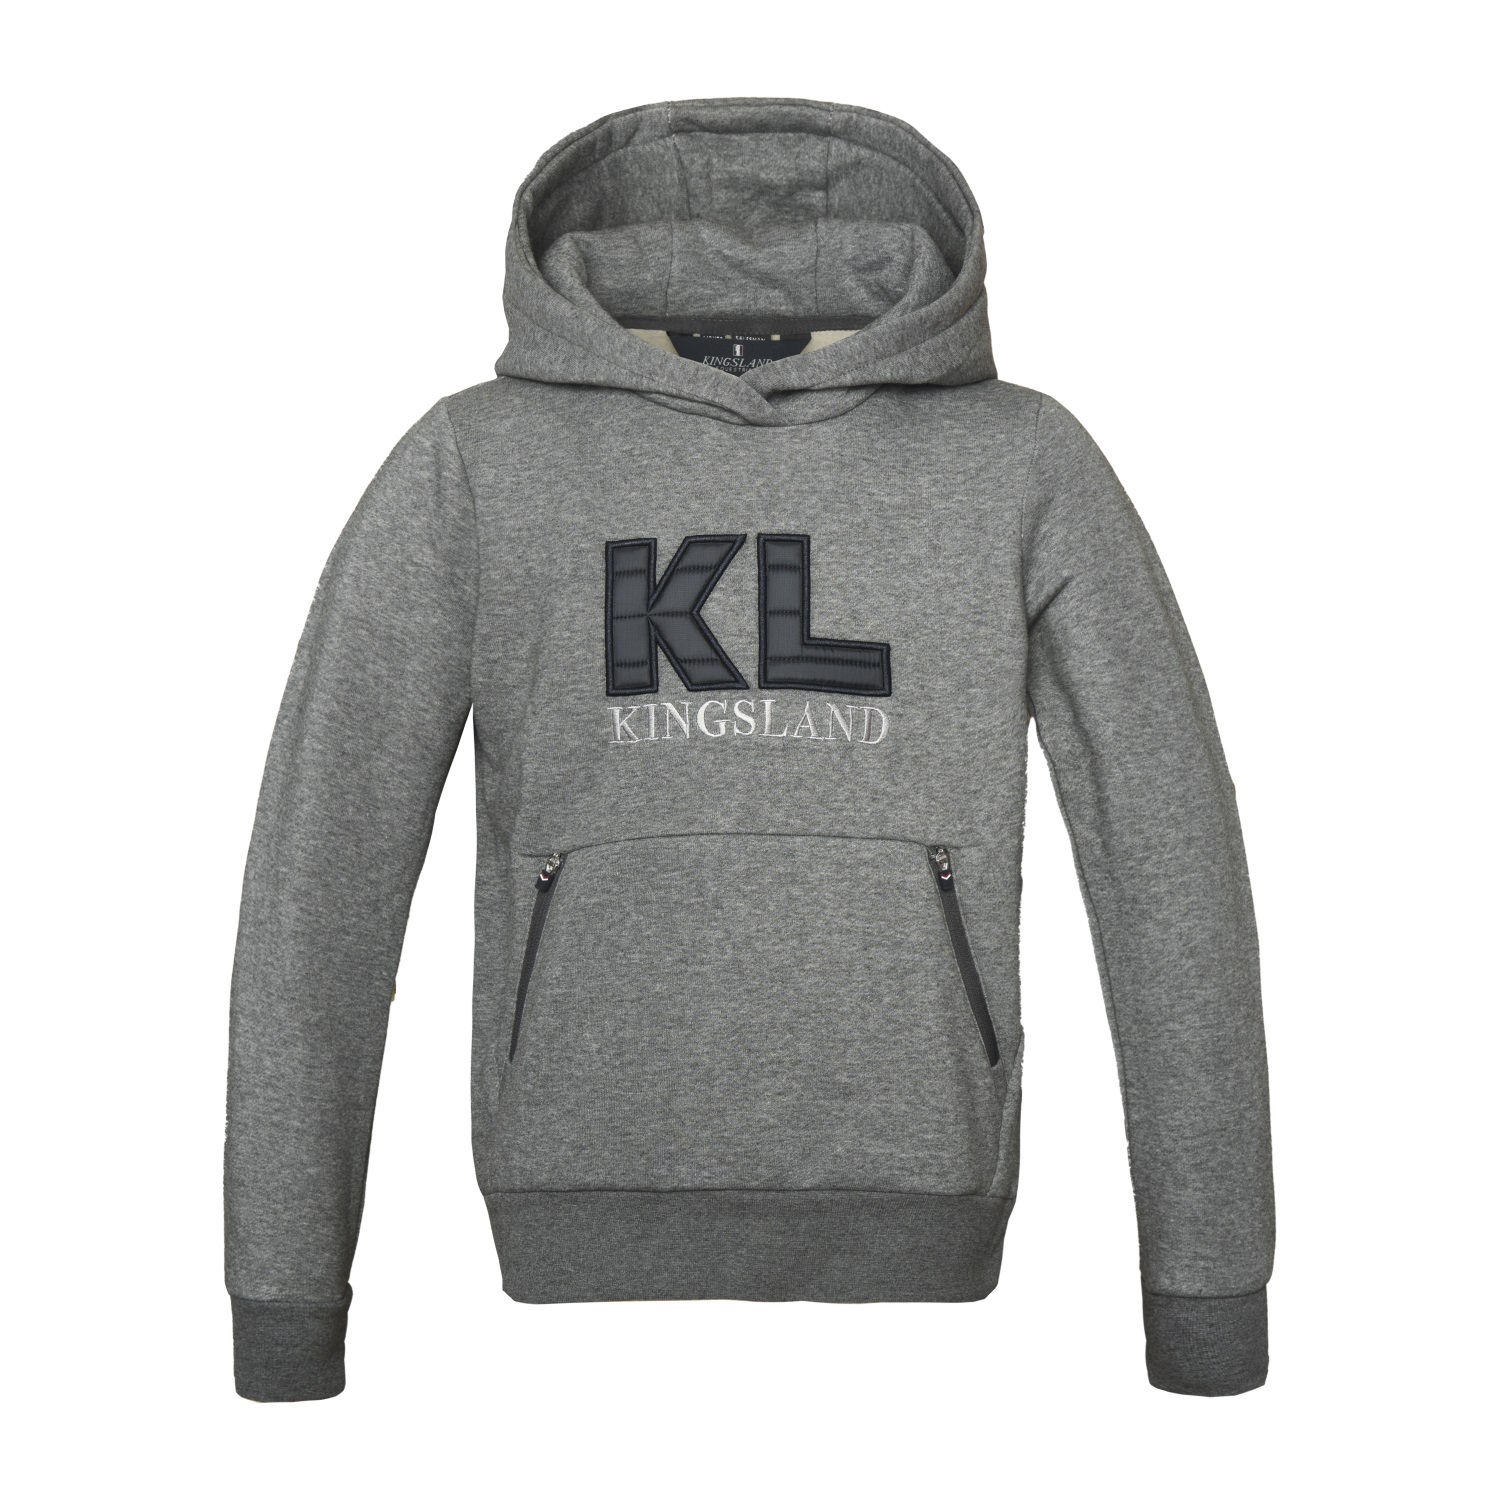 KINGSLAND Unisex Sweatshirt Hoodie KLeliae - grey forged iron - L - 1